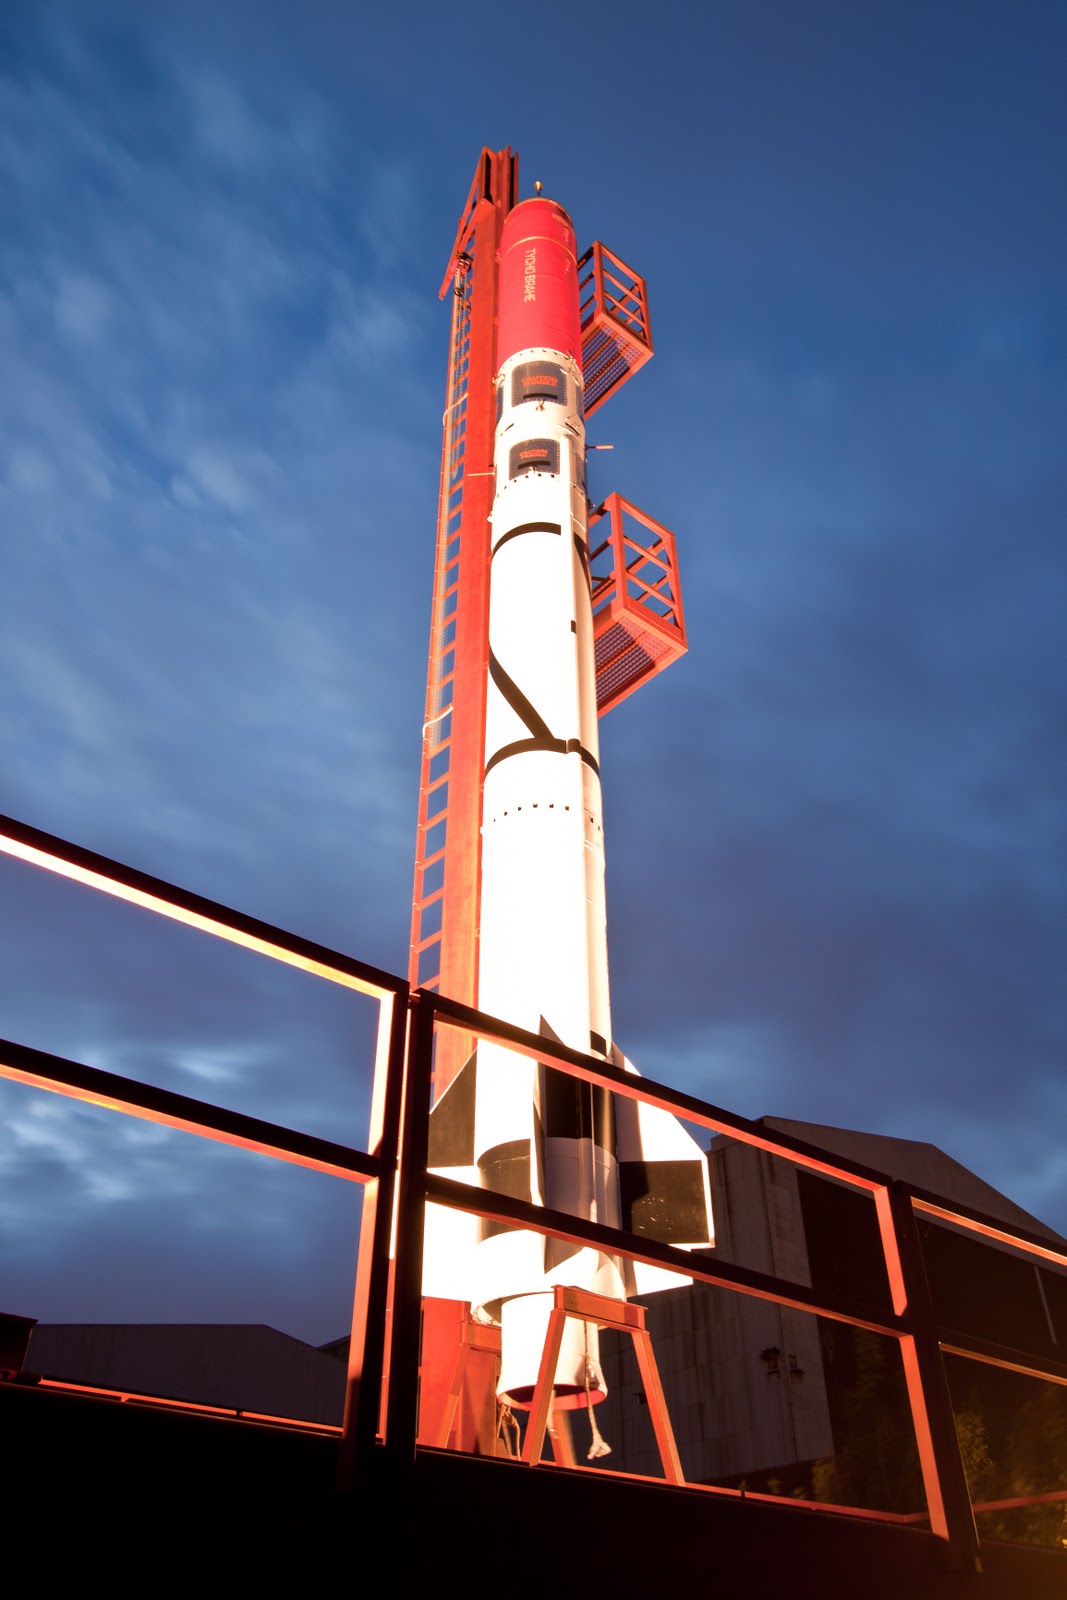 The rocket HEAT-1X/Tycho Brahe after final assembly. Photo:Thomas Pedersen